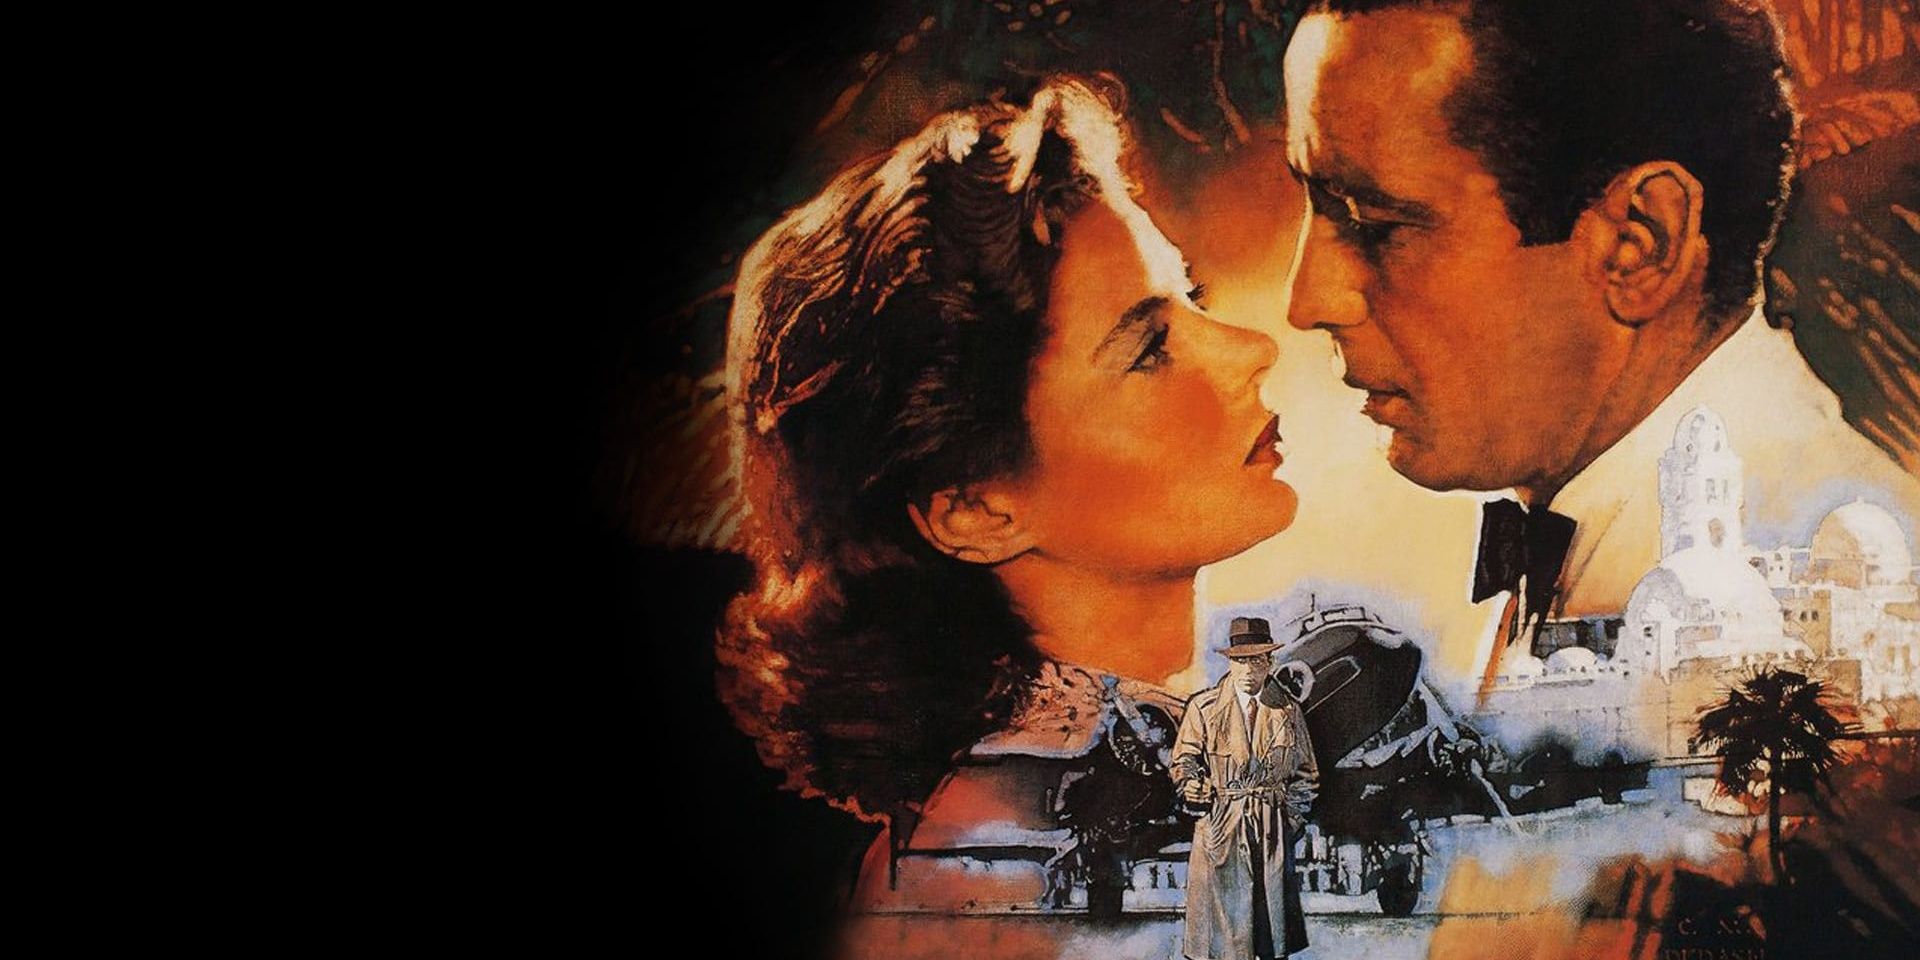 poster for Casablanca featuring Humphrey Bogart, Ingrid Bergman and Paul Henreid